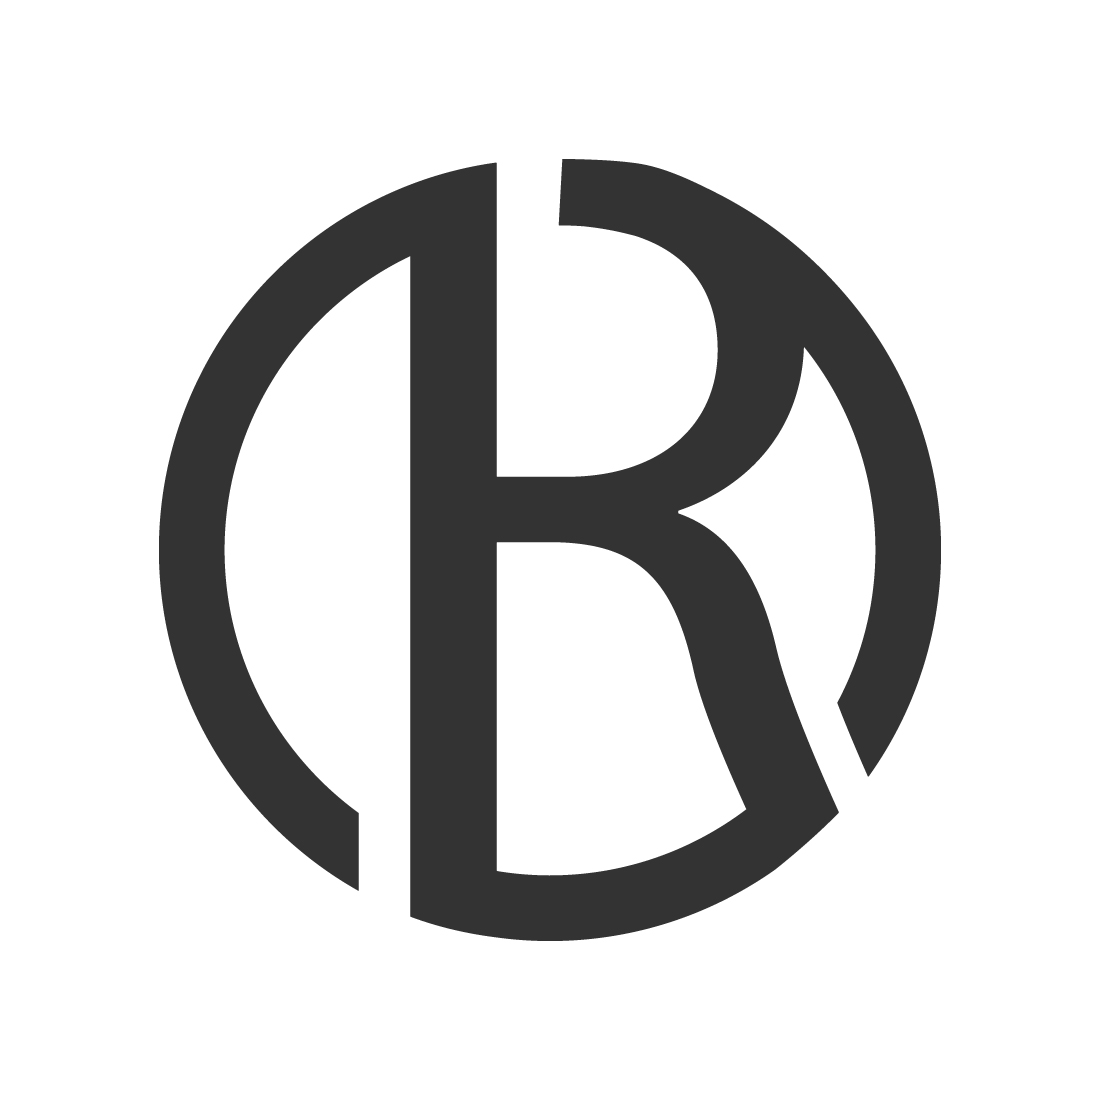 Professional OR letters logo vector images design R logo design circle icon black color R letter logo best identity preview image.